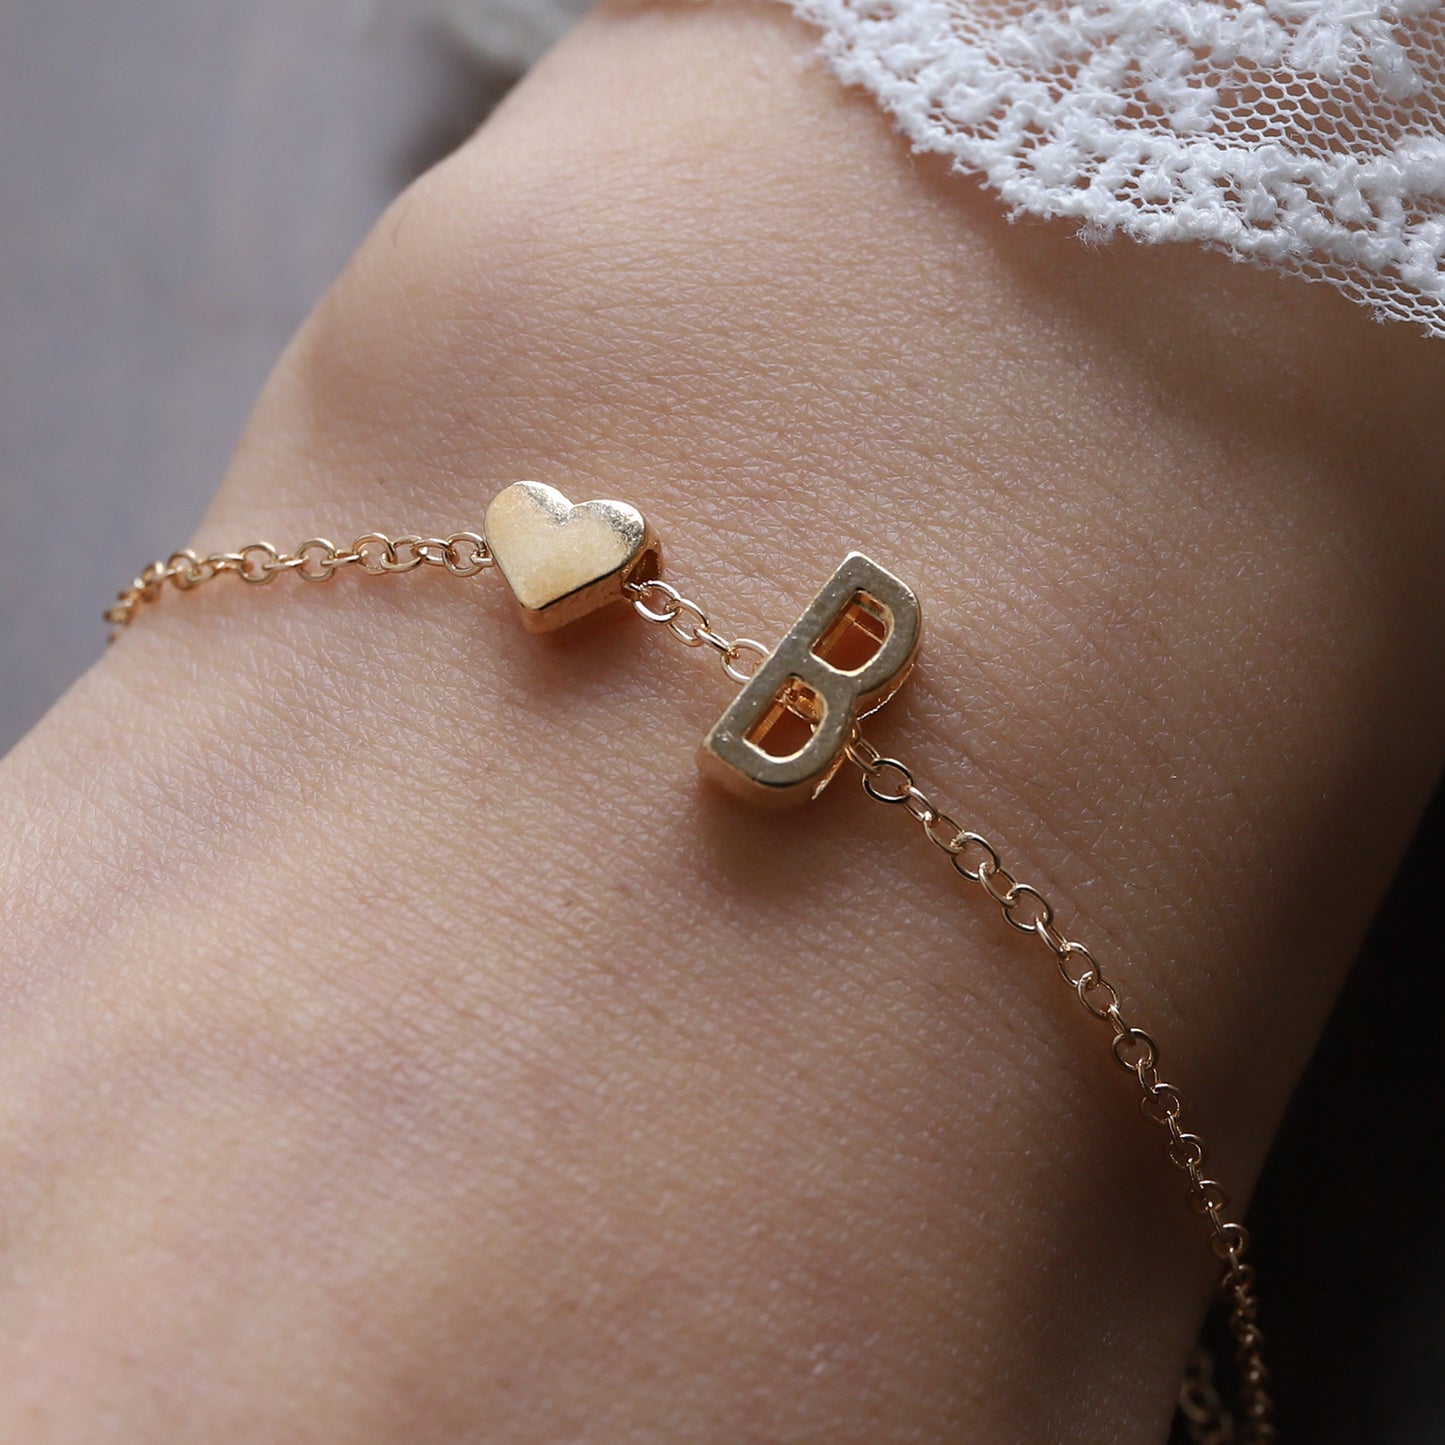 English Letter Graceful Personality Alloy Heart-shaped Letter Bracelet